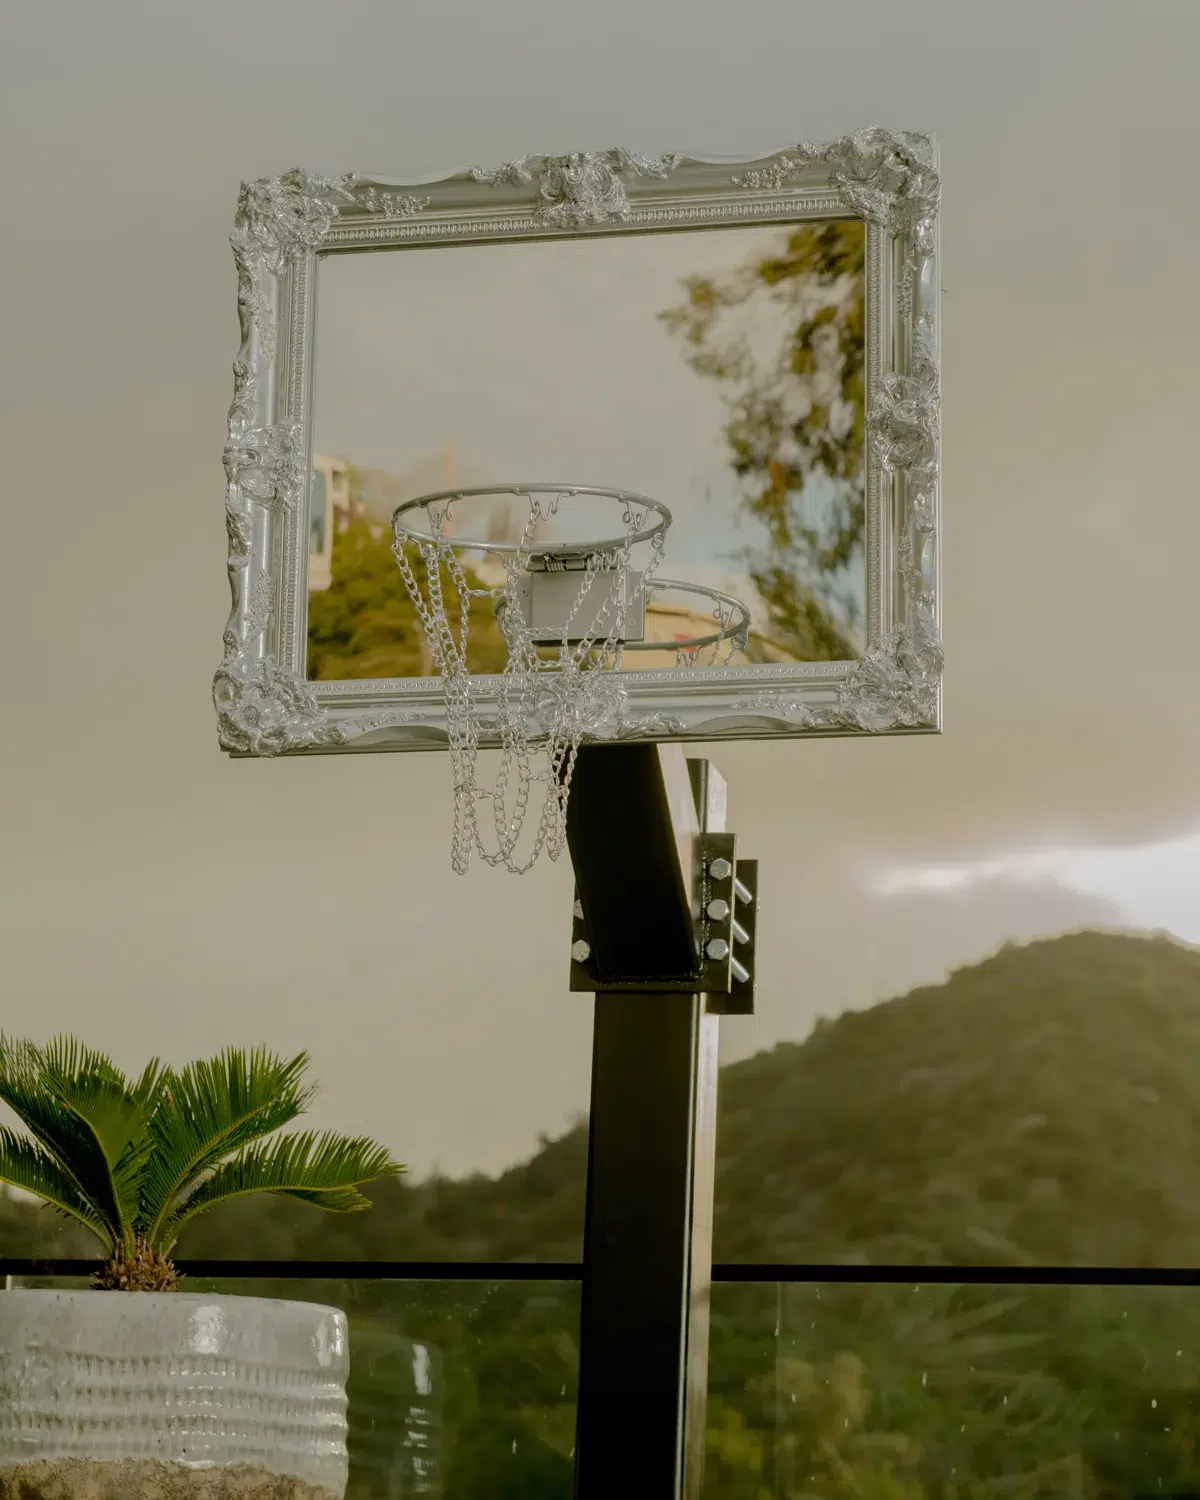 A basketball hoop framed in a mirror.